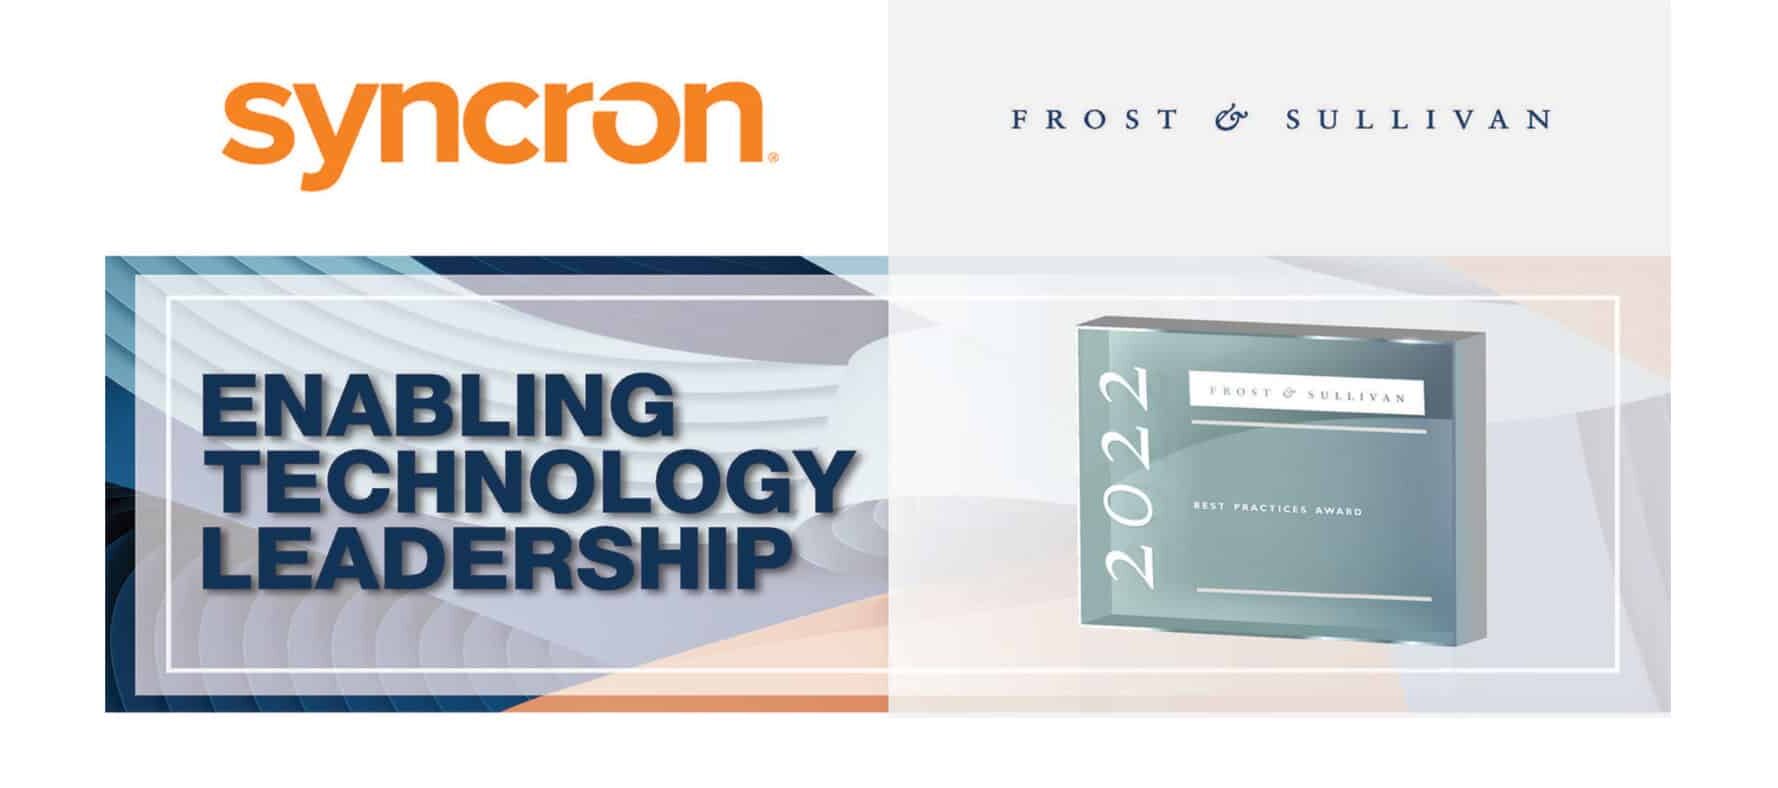 Syncron Frost & Sullivan Enabling Technology Leadership 2022 Best practice award